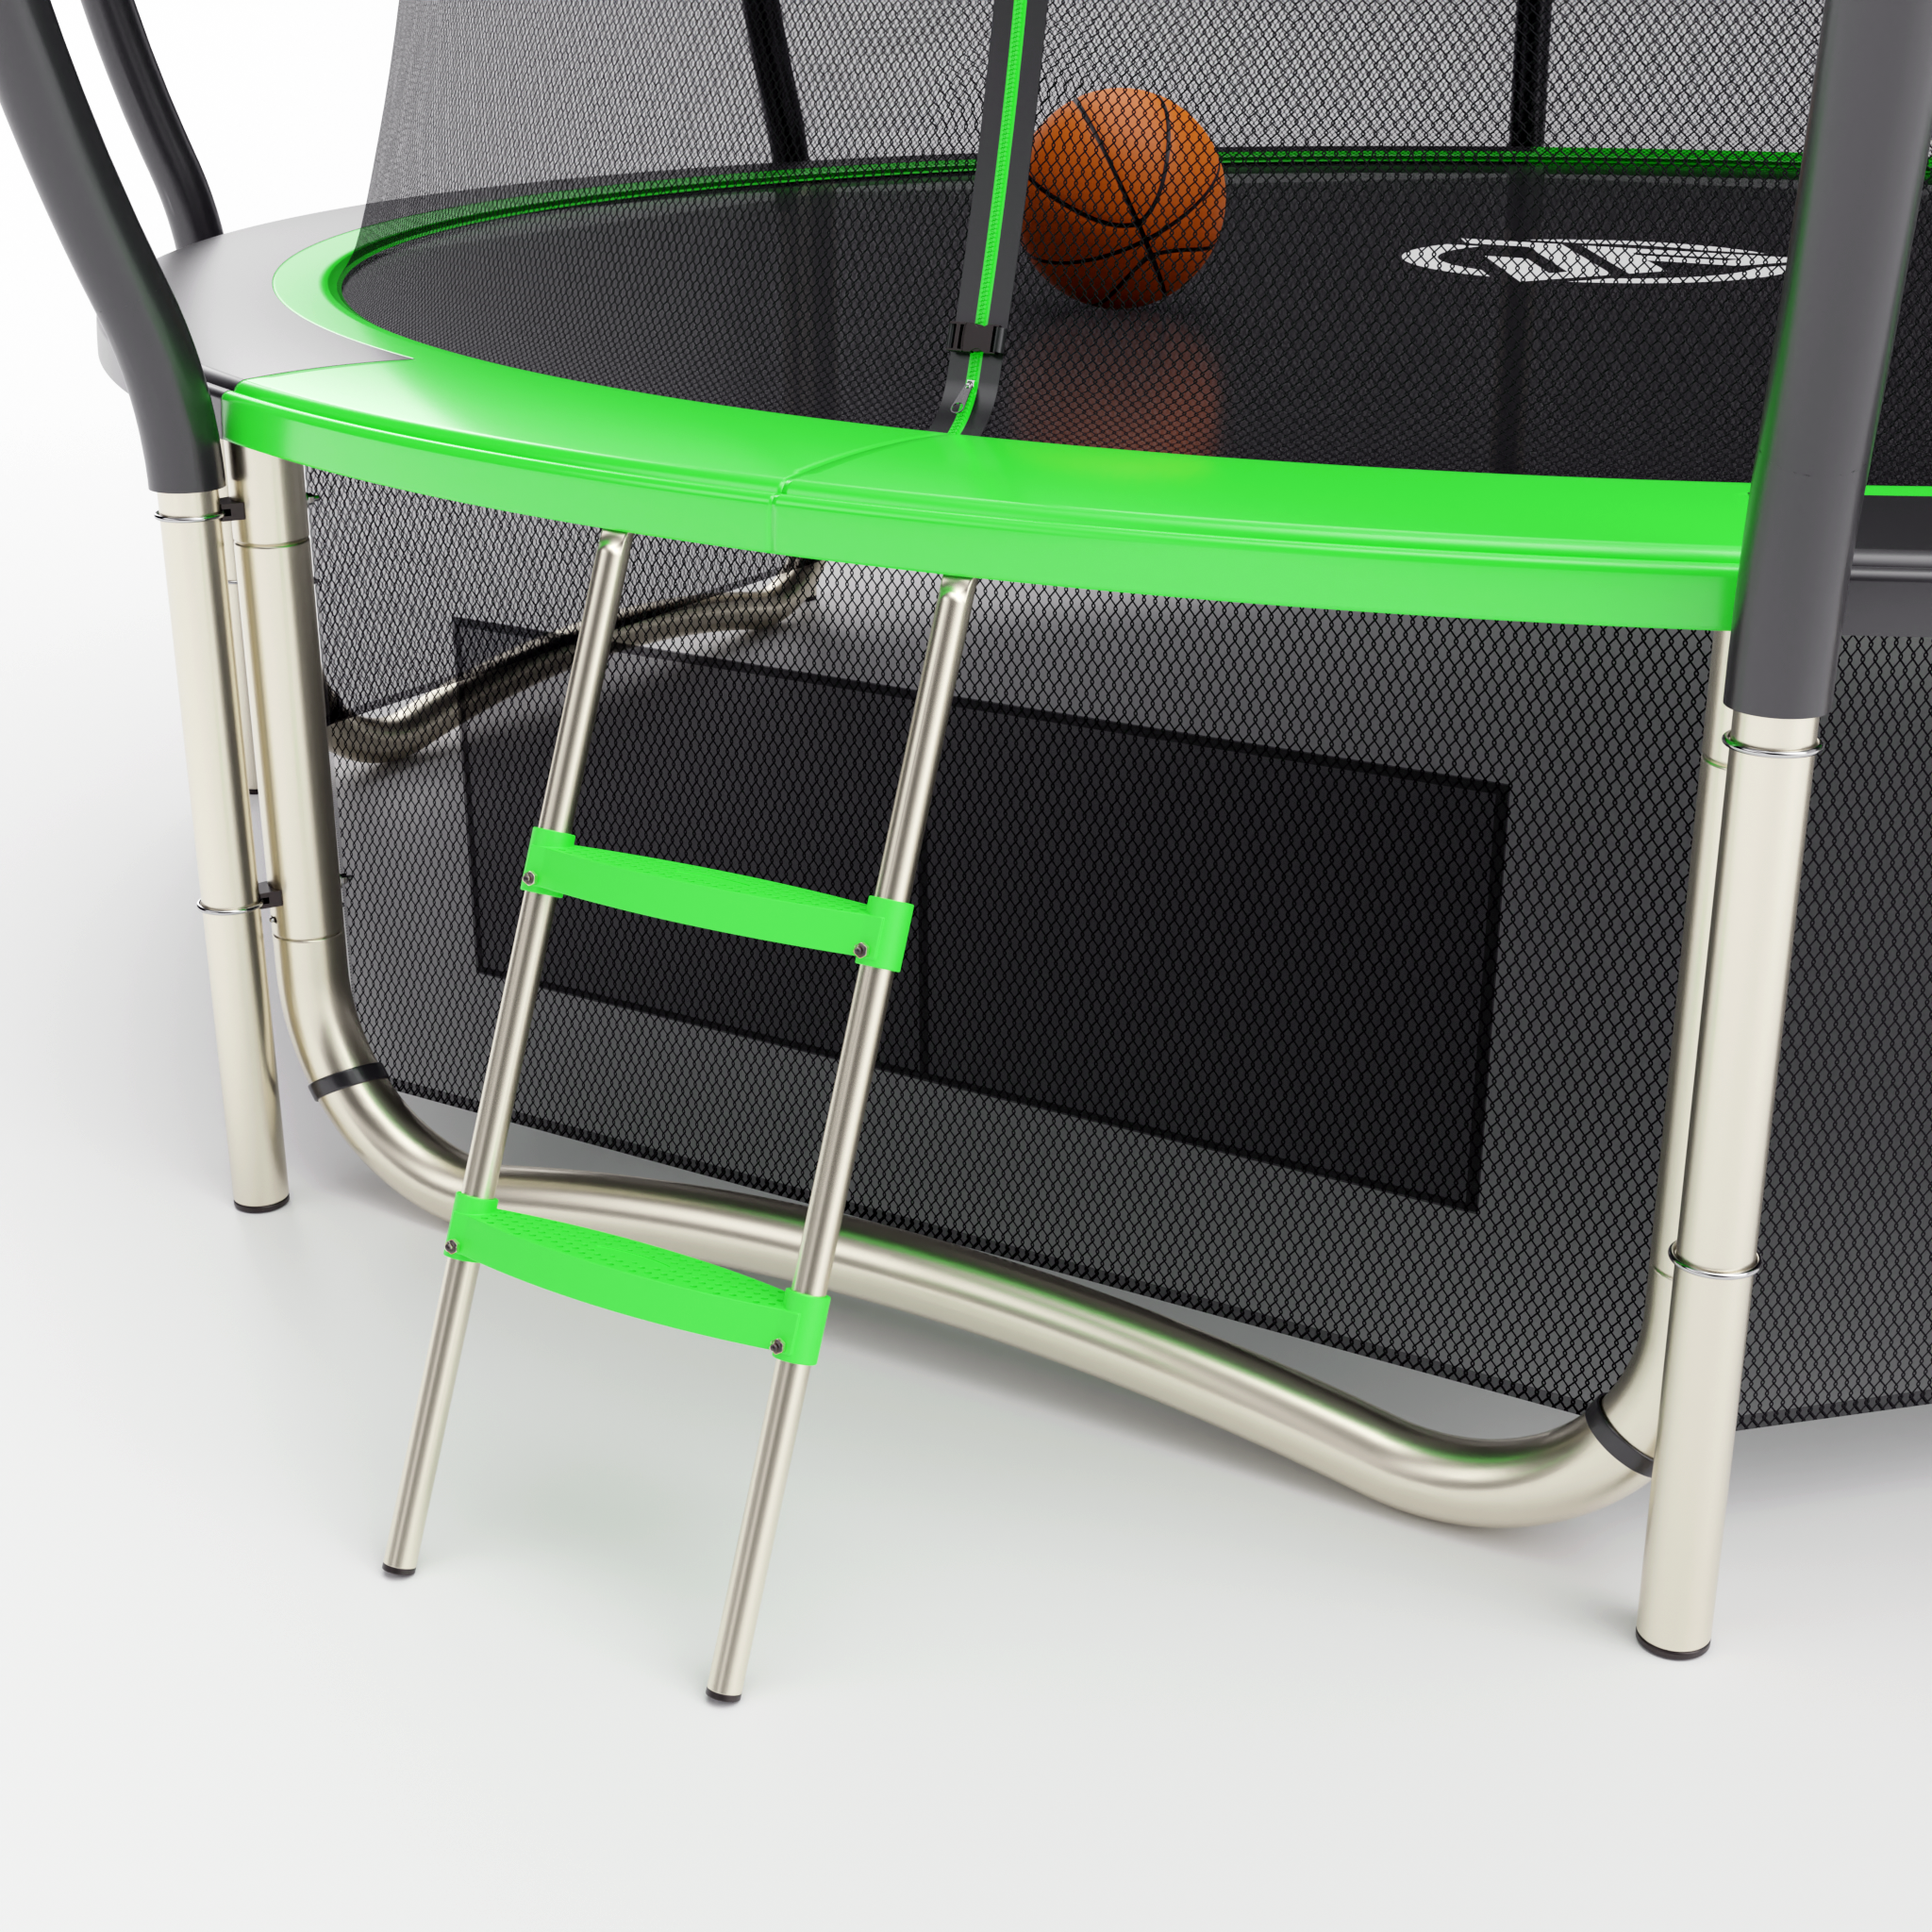 Фото 3 - Батут Jump Power 8 ft Pro Inside Basket Green.